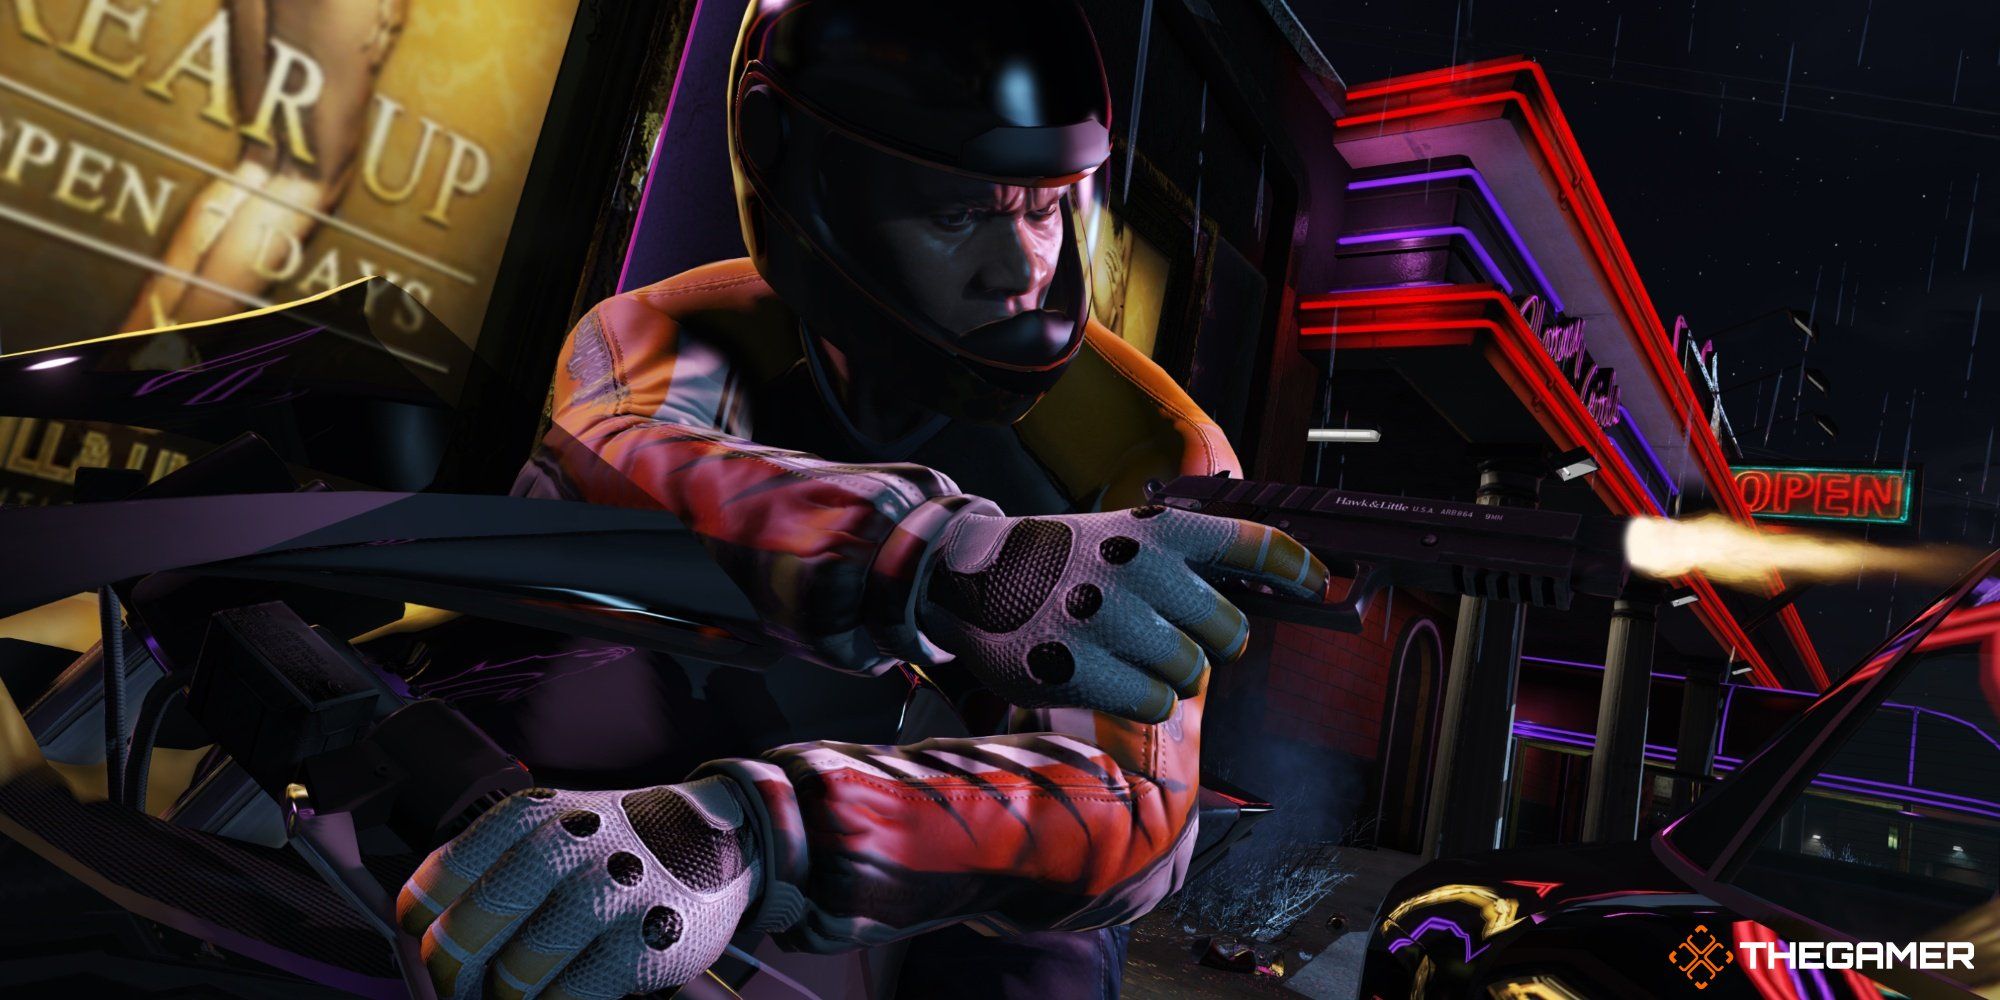 A screencap of a GTA 5 character shooting a gun on a motorcycle